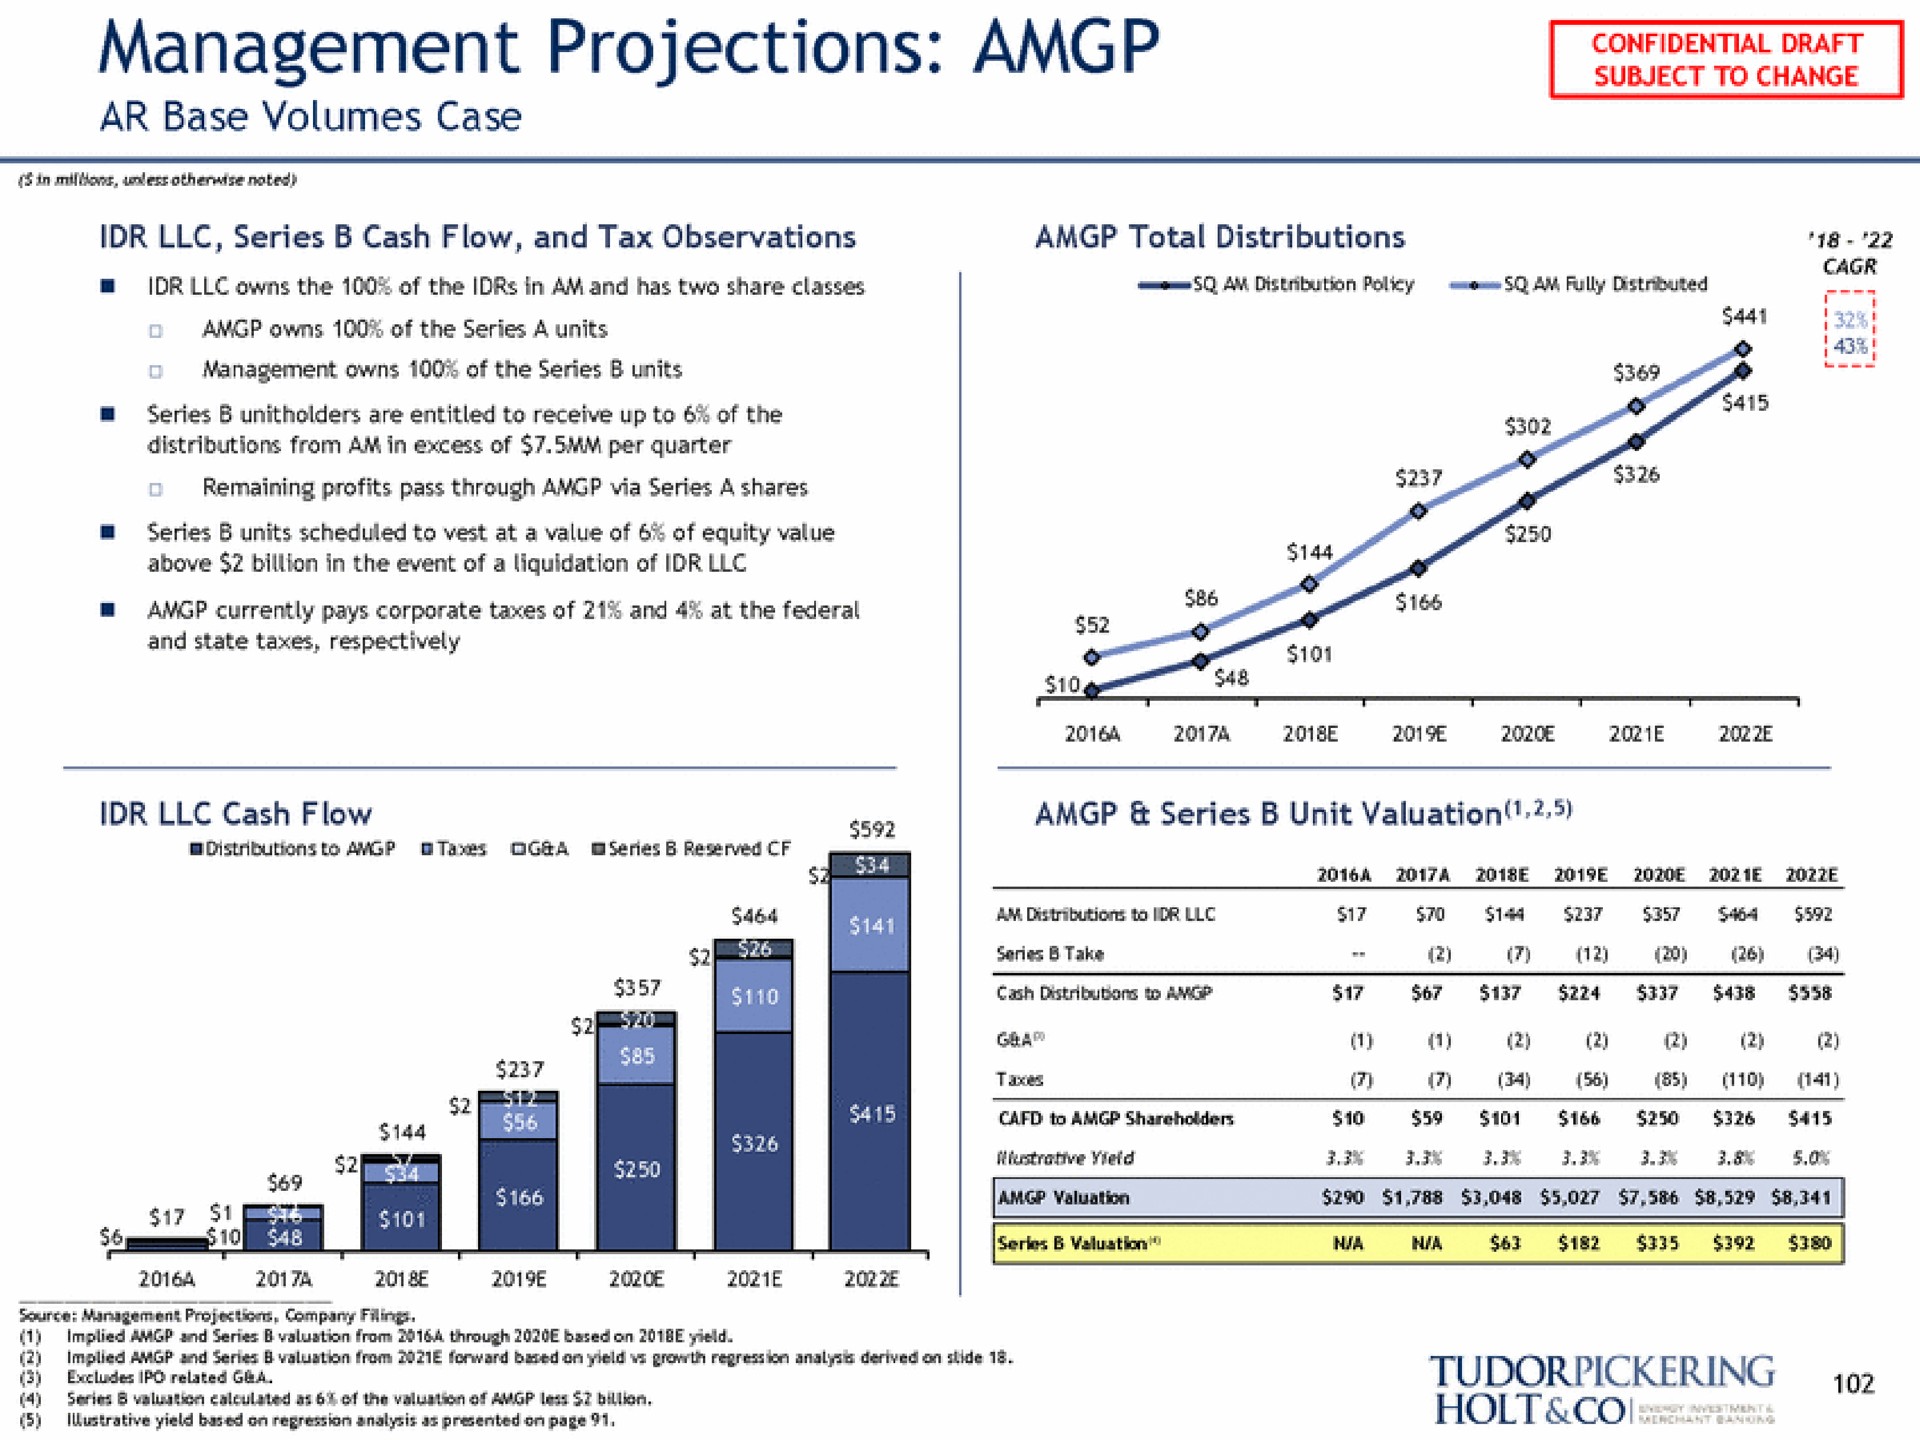 management projections | Tudor, Pickering, Holt & Co